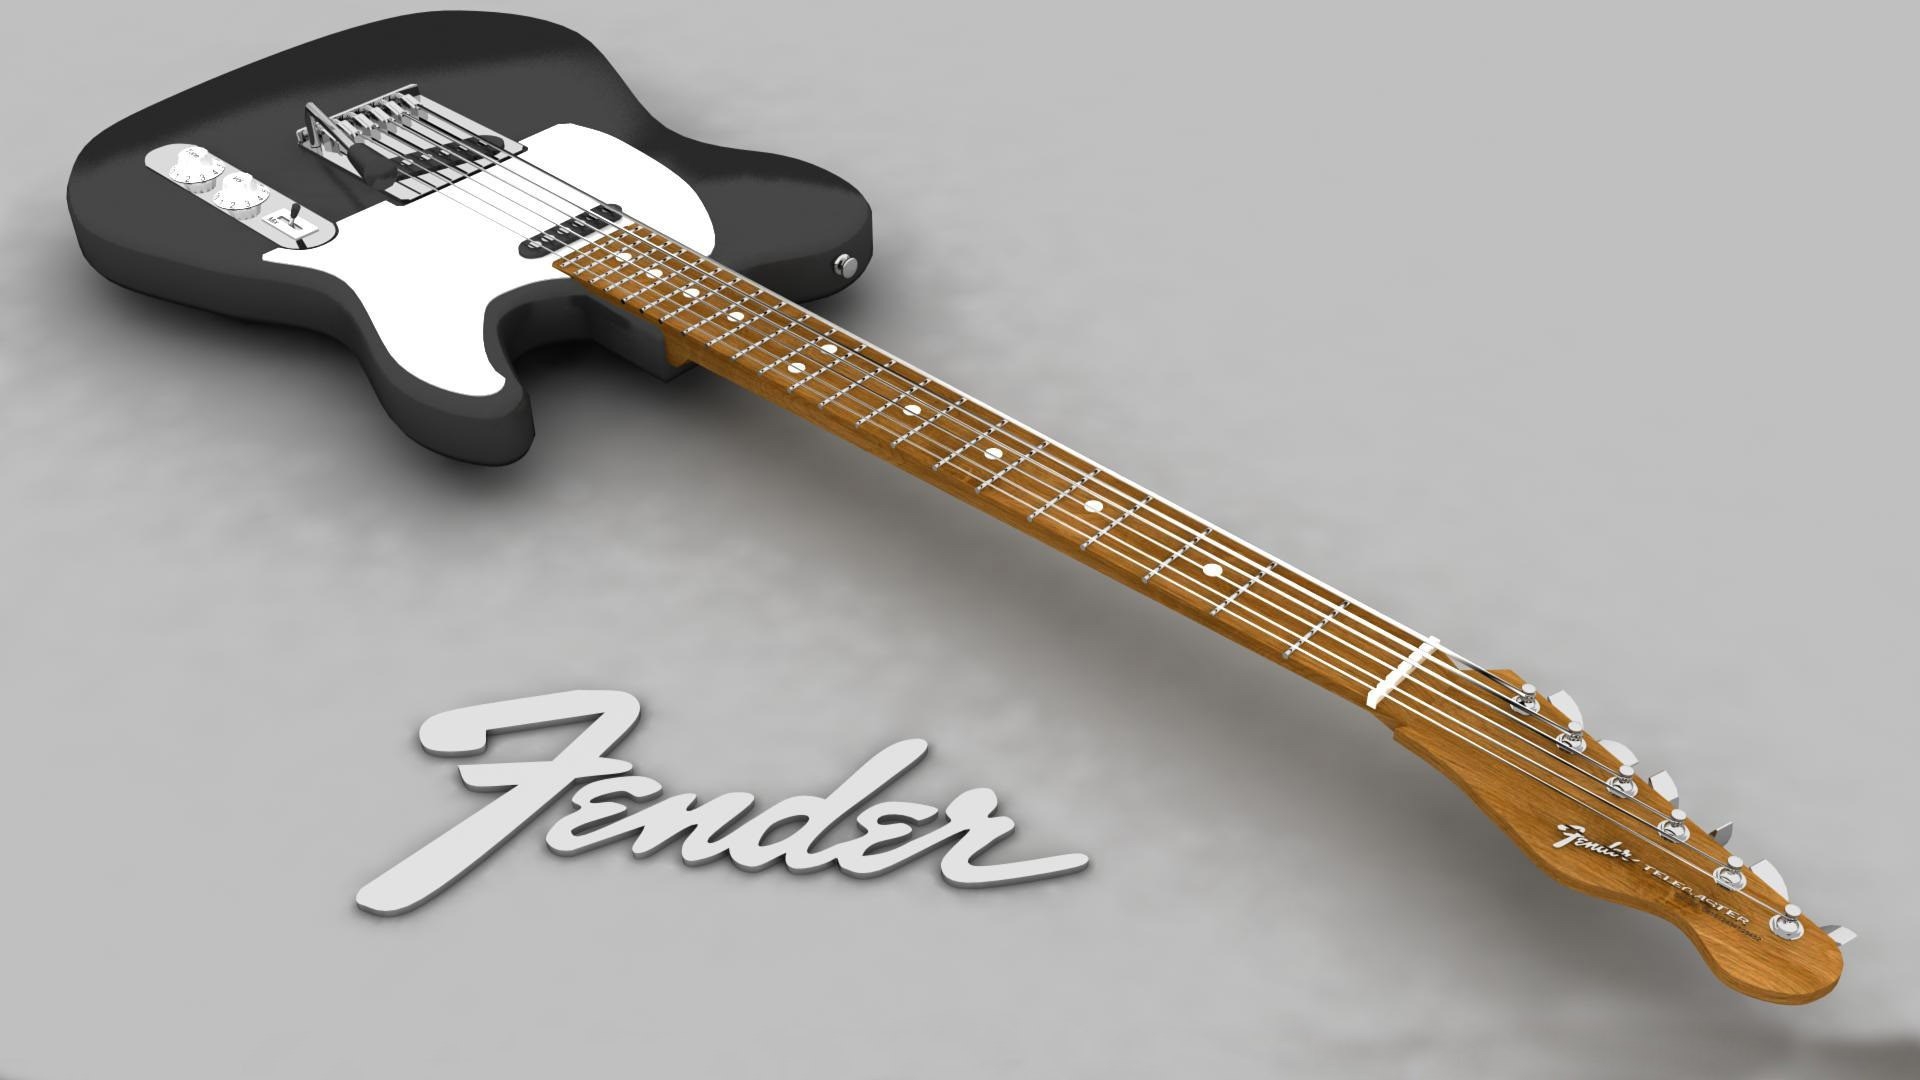 fender musical instruments hd wallpaper | wallpapers55.com - Best ...